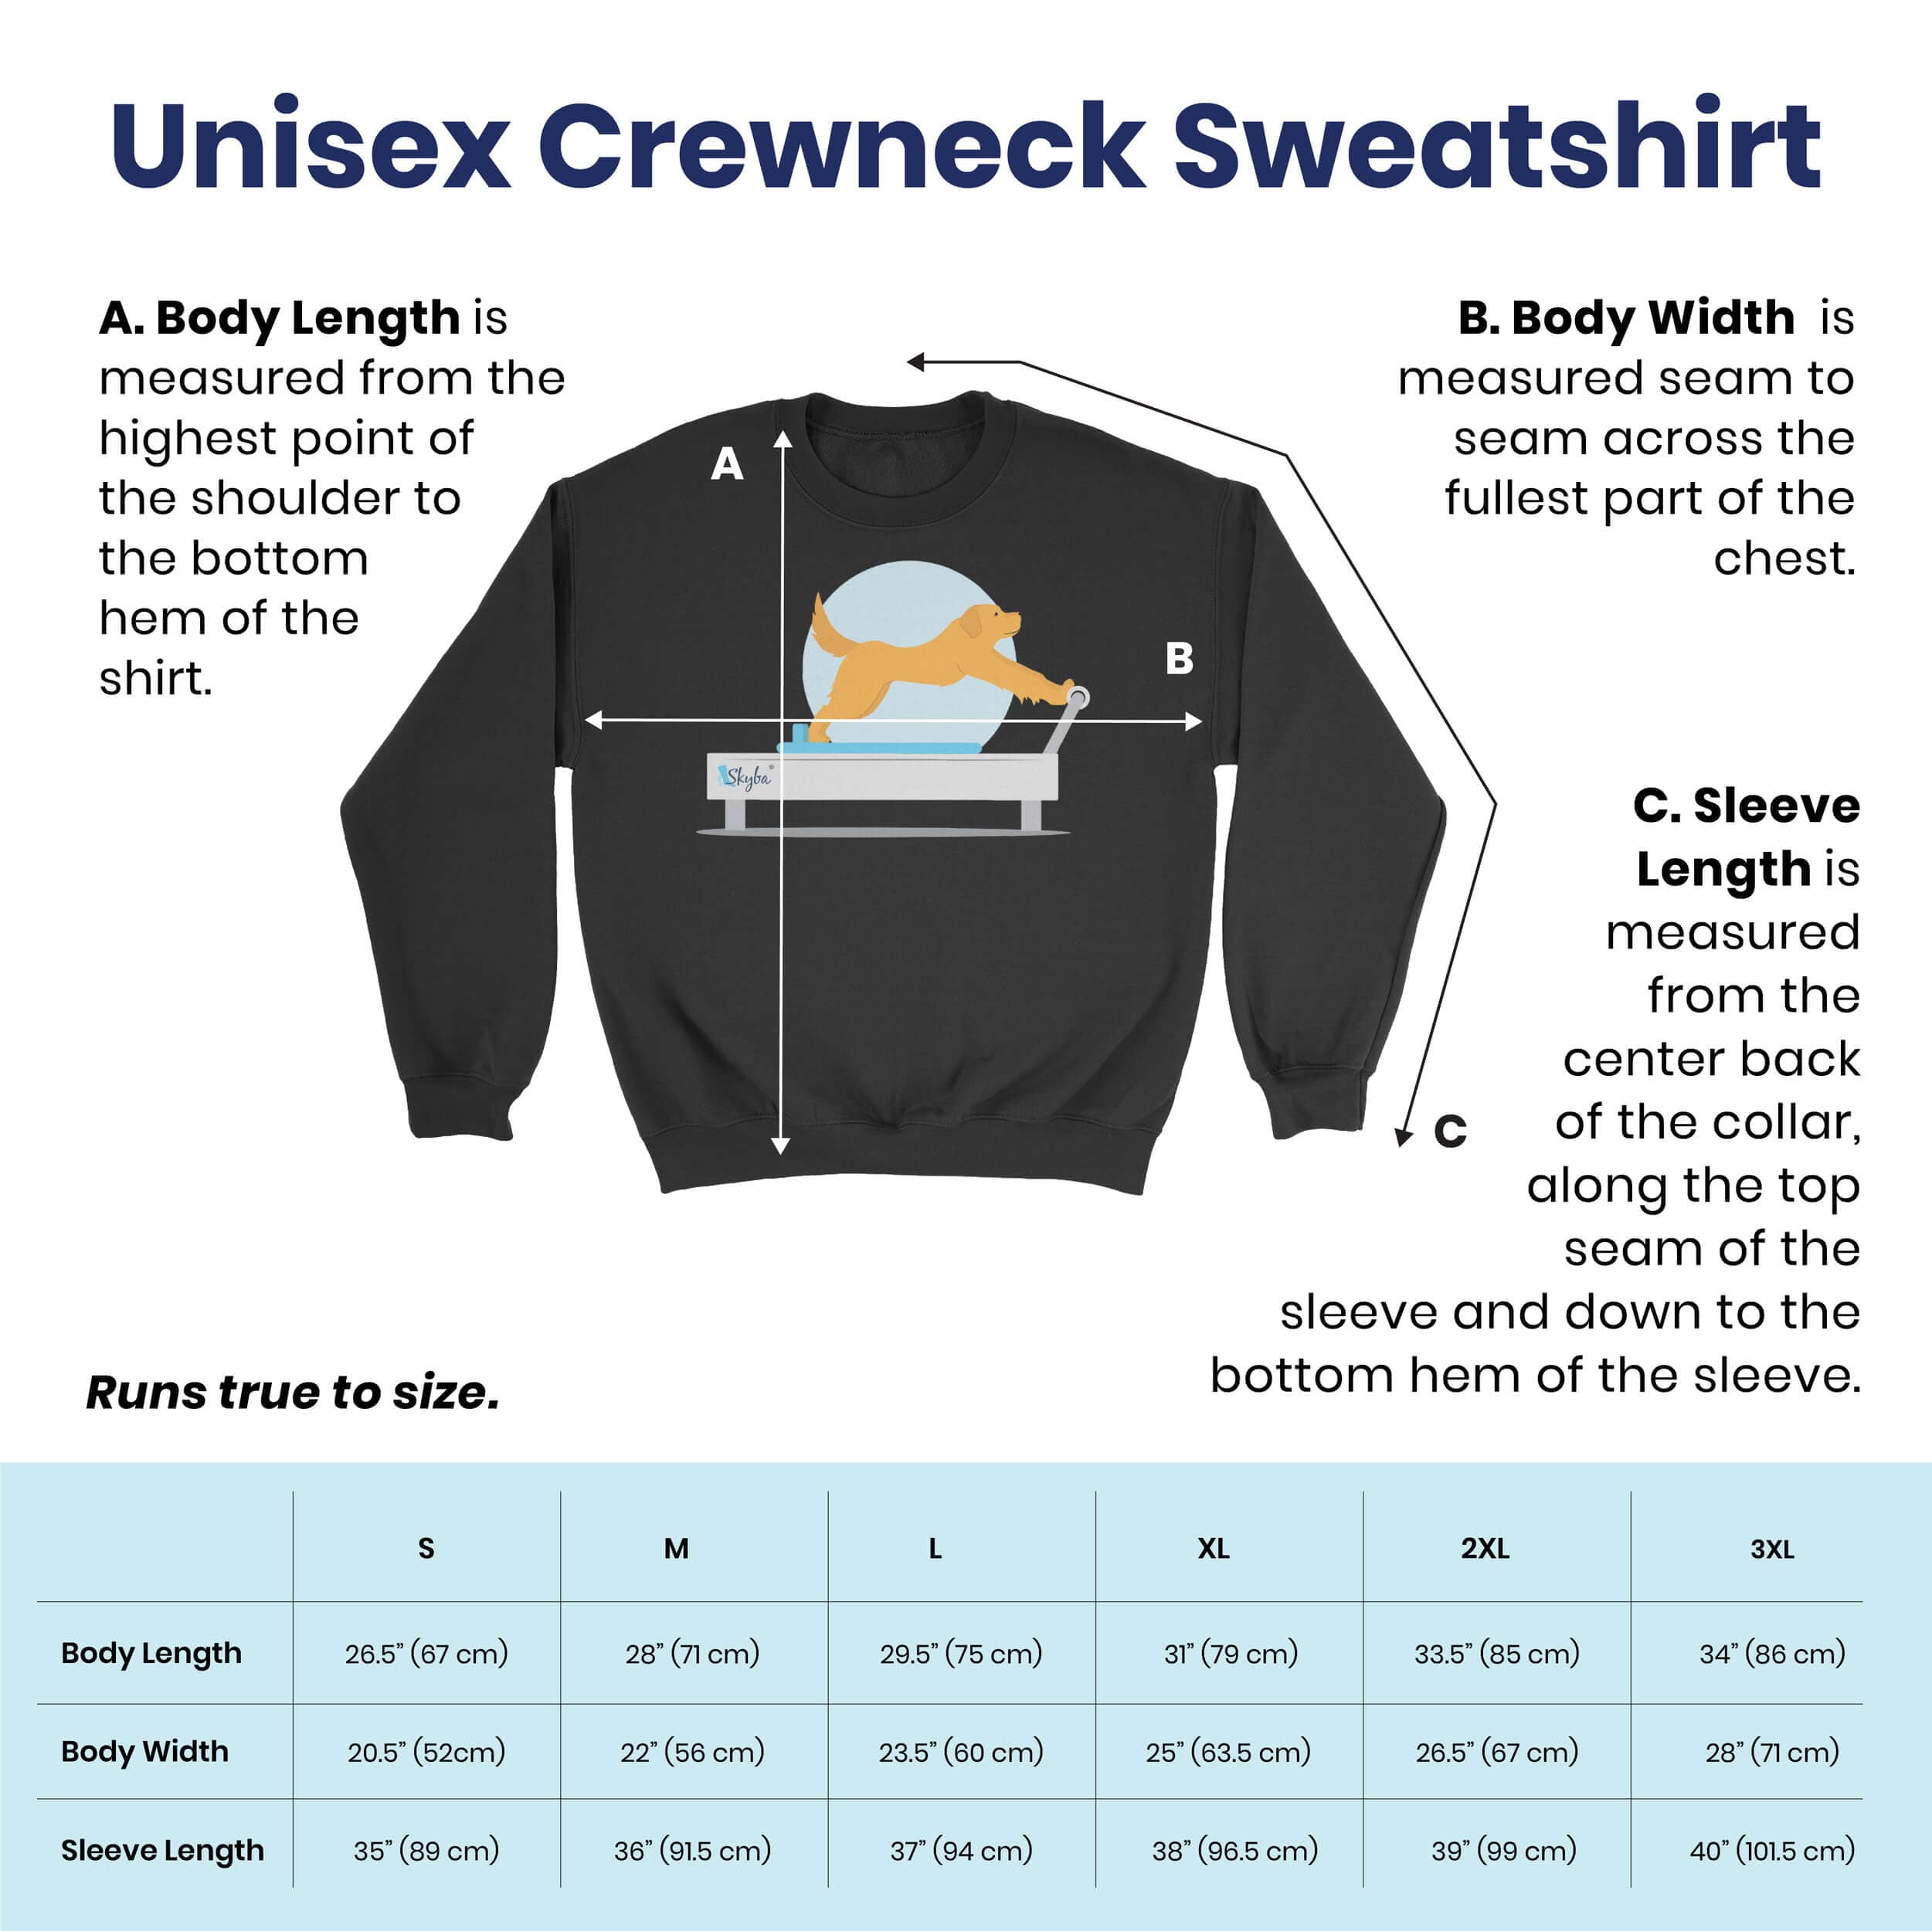 Panda Side Plank - Cozy Crewneck Sweatshirt Skyba Sweatshirt